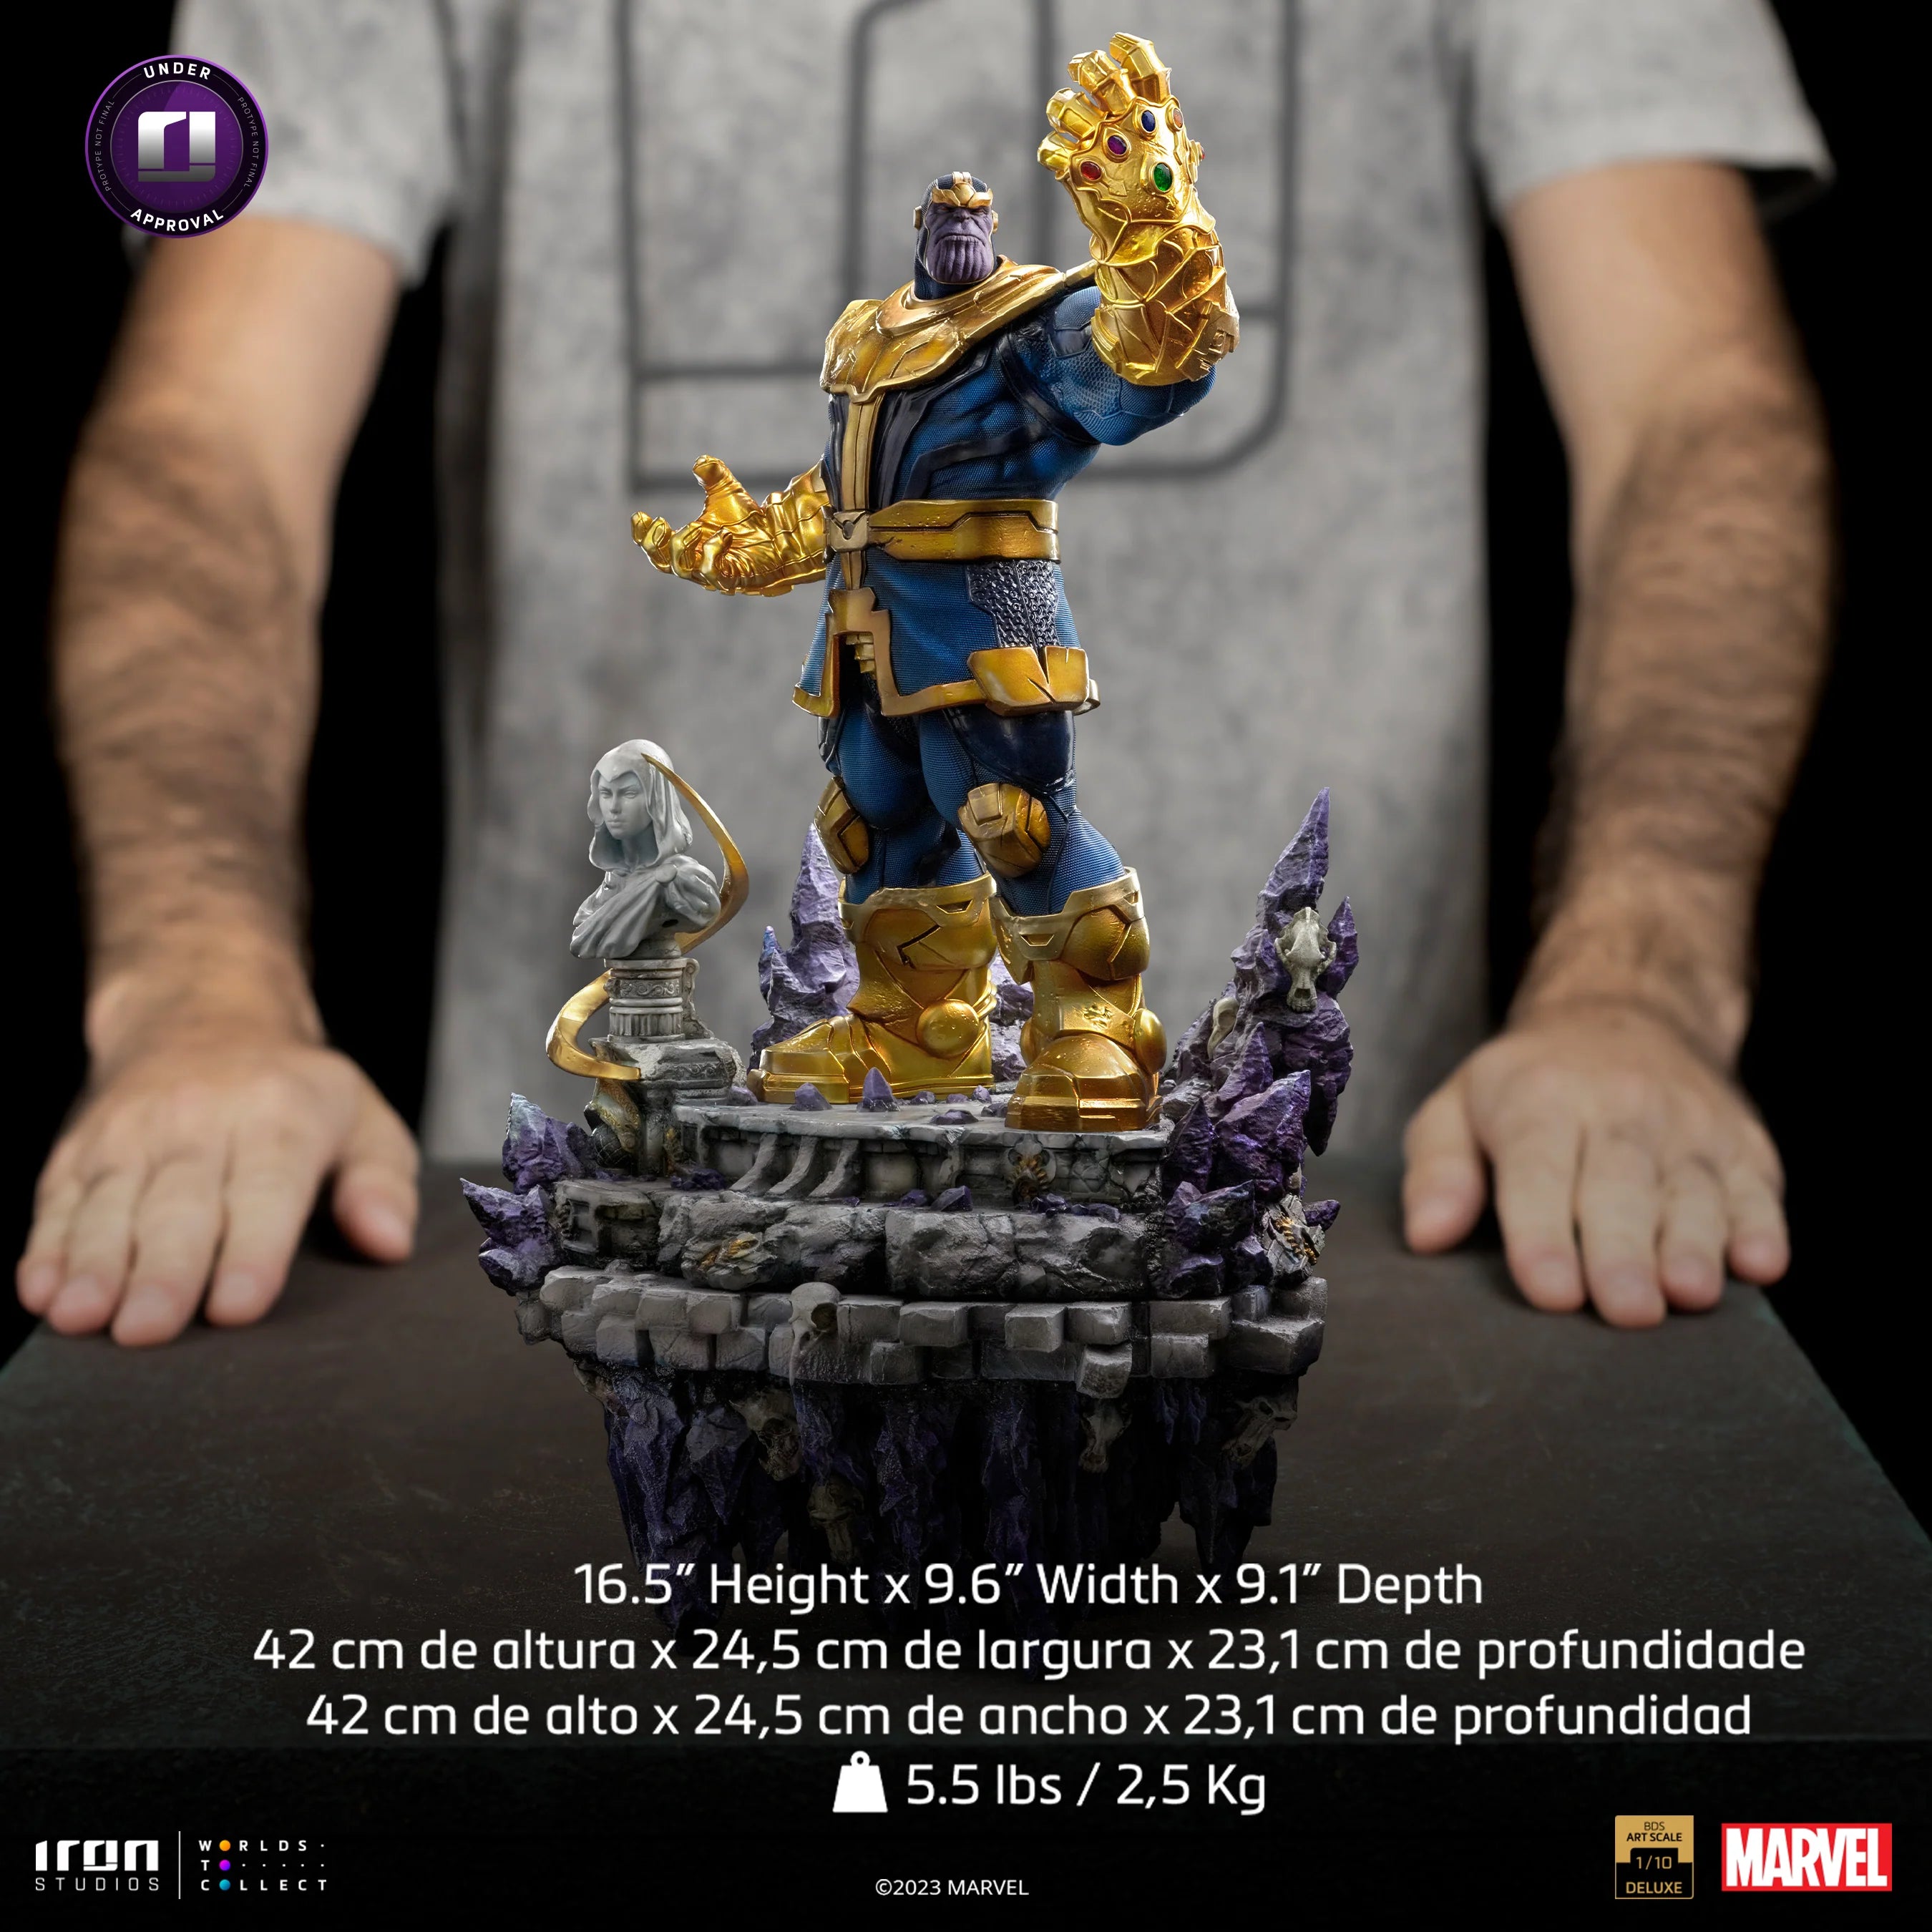 Thanos Infinity Gauntlet Diorama by Iron Studios